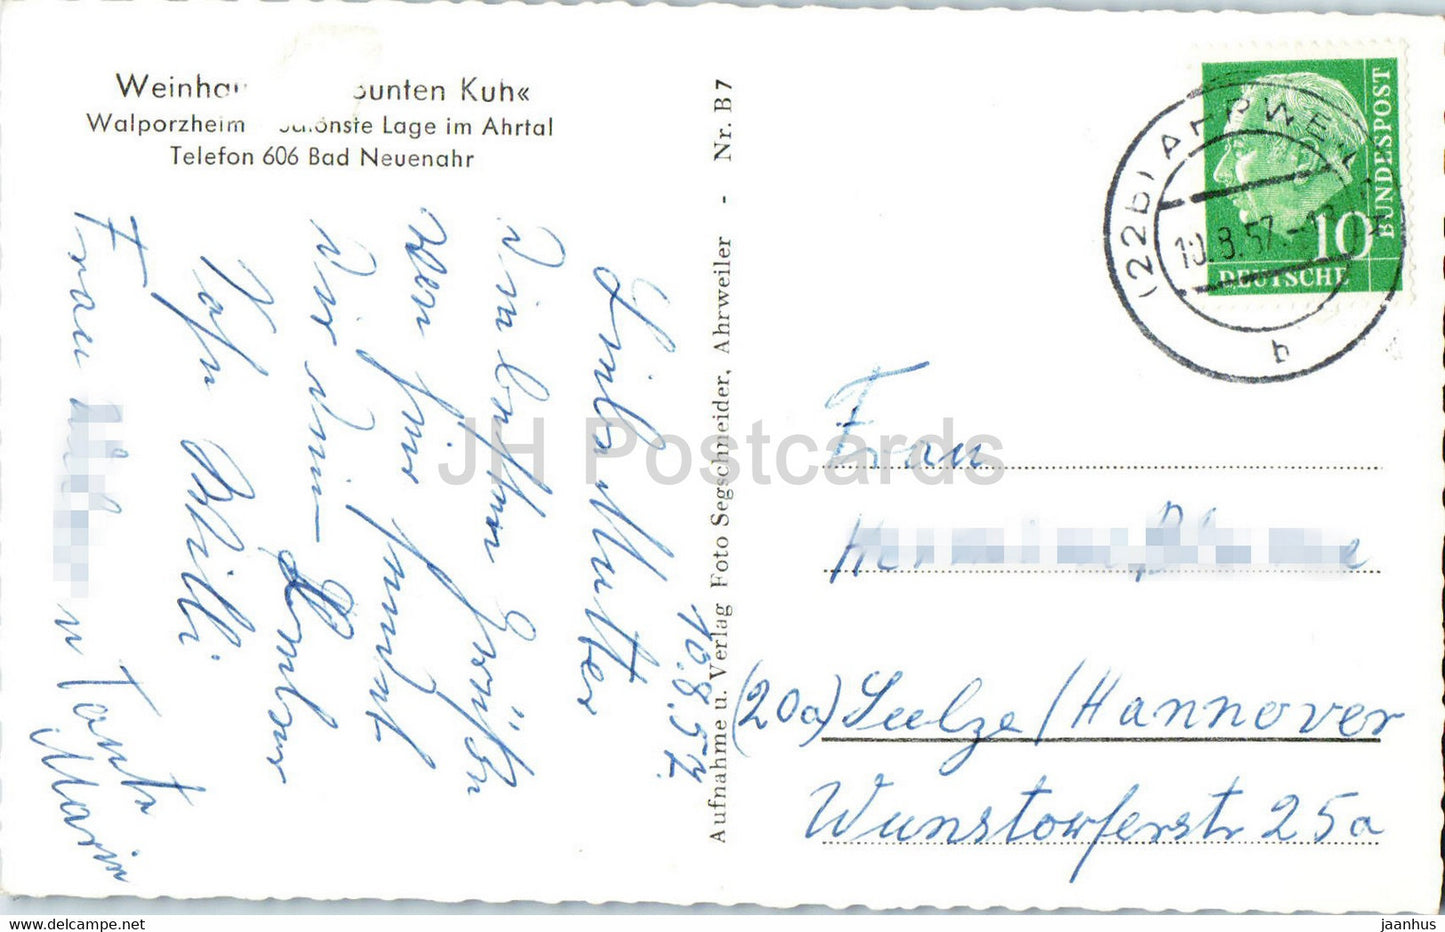 Walporzheim im Ahrtal Bunte Kuh Terrasse - old postcard - 1957 - Germany - used